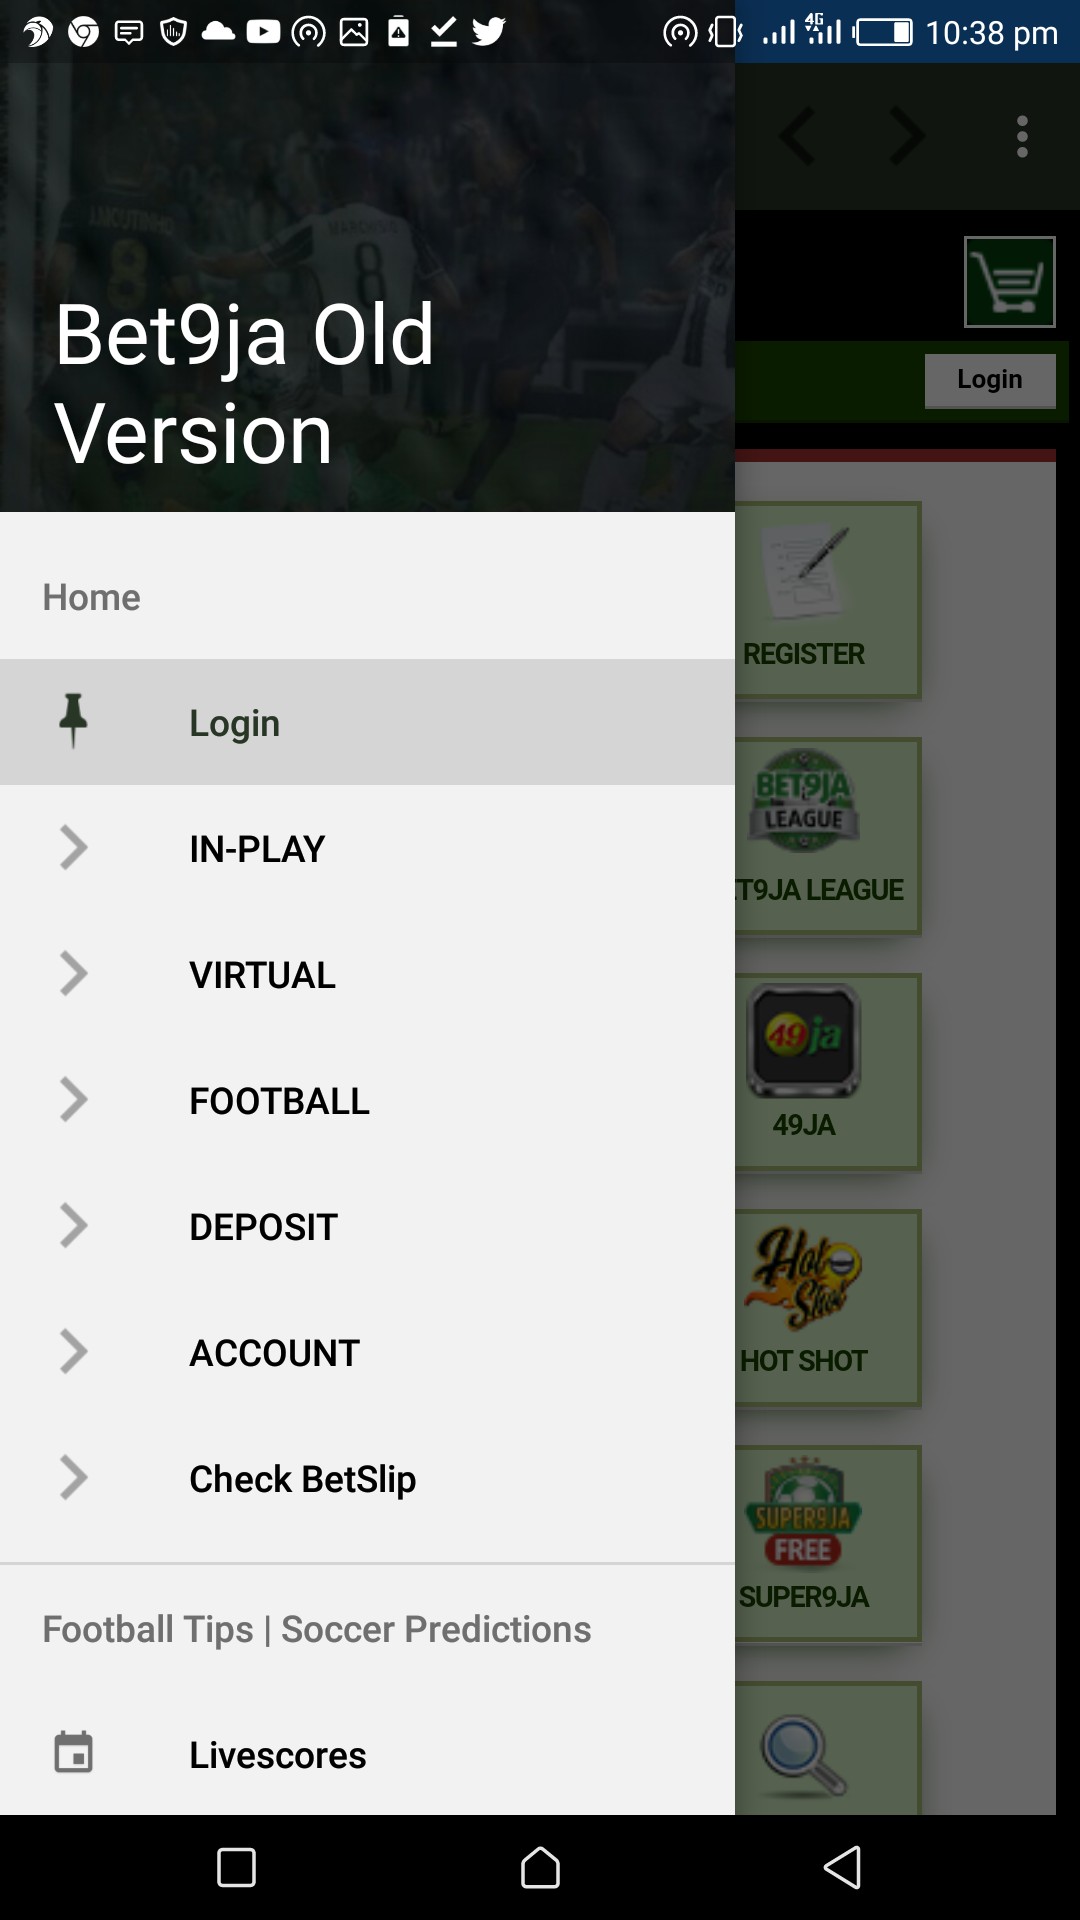 Screenshot 20200111 223832 1 - Bet9ja Mobile App Old Version (Original)